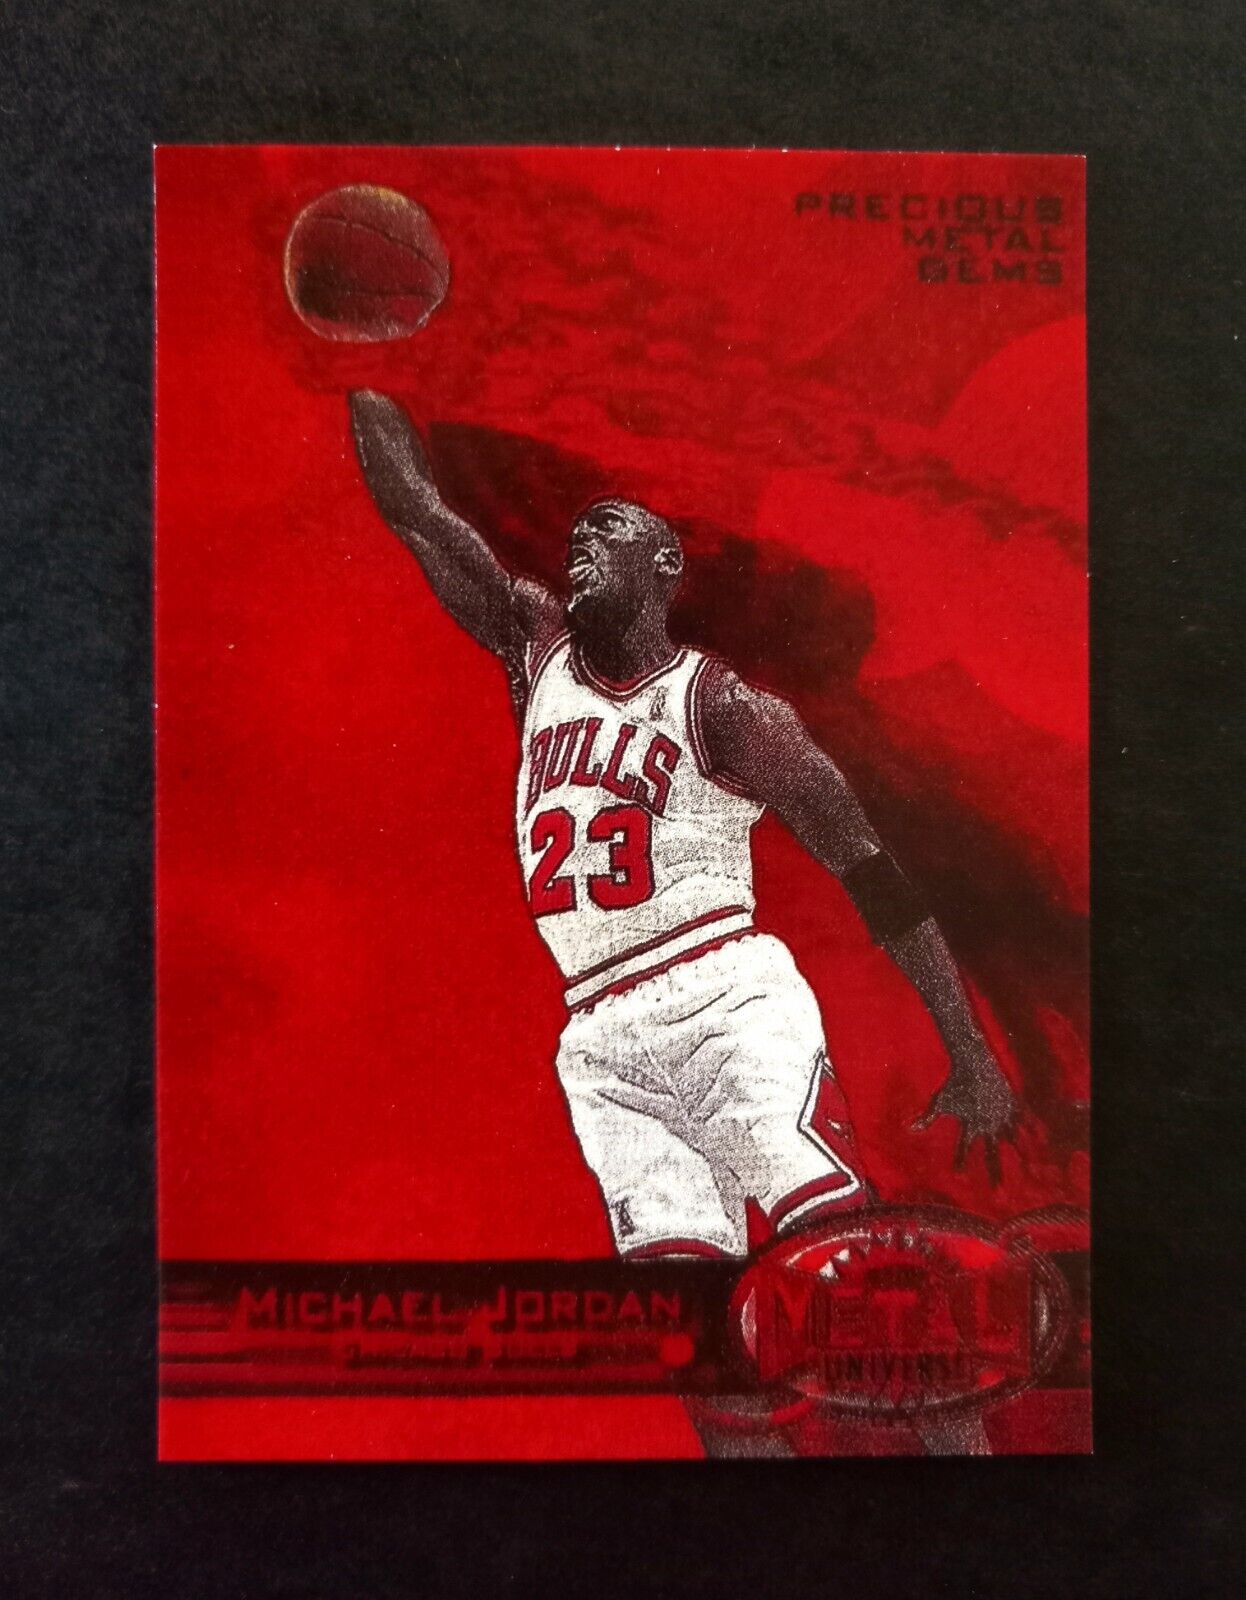 1997-98 Skybox Metal Universe Michael Jordan NOVELTY CARD #52/100 Iconic Card